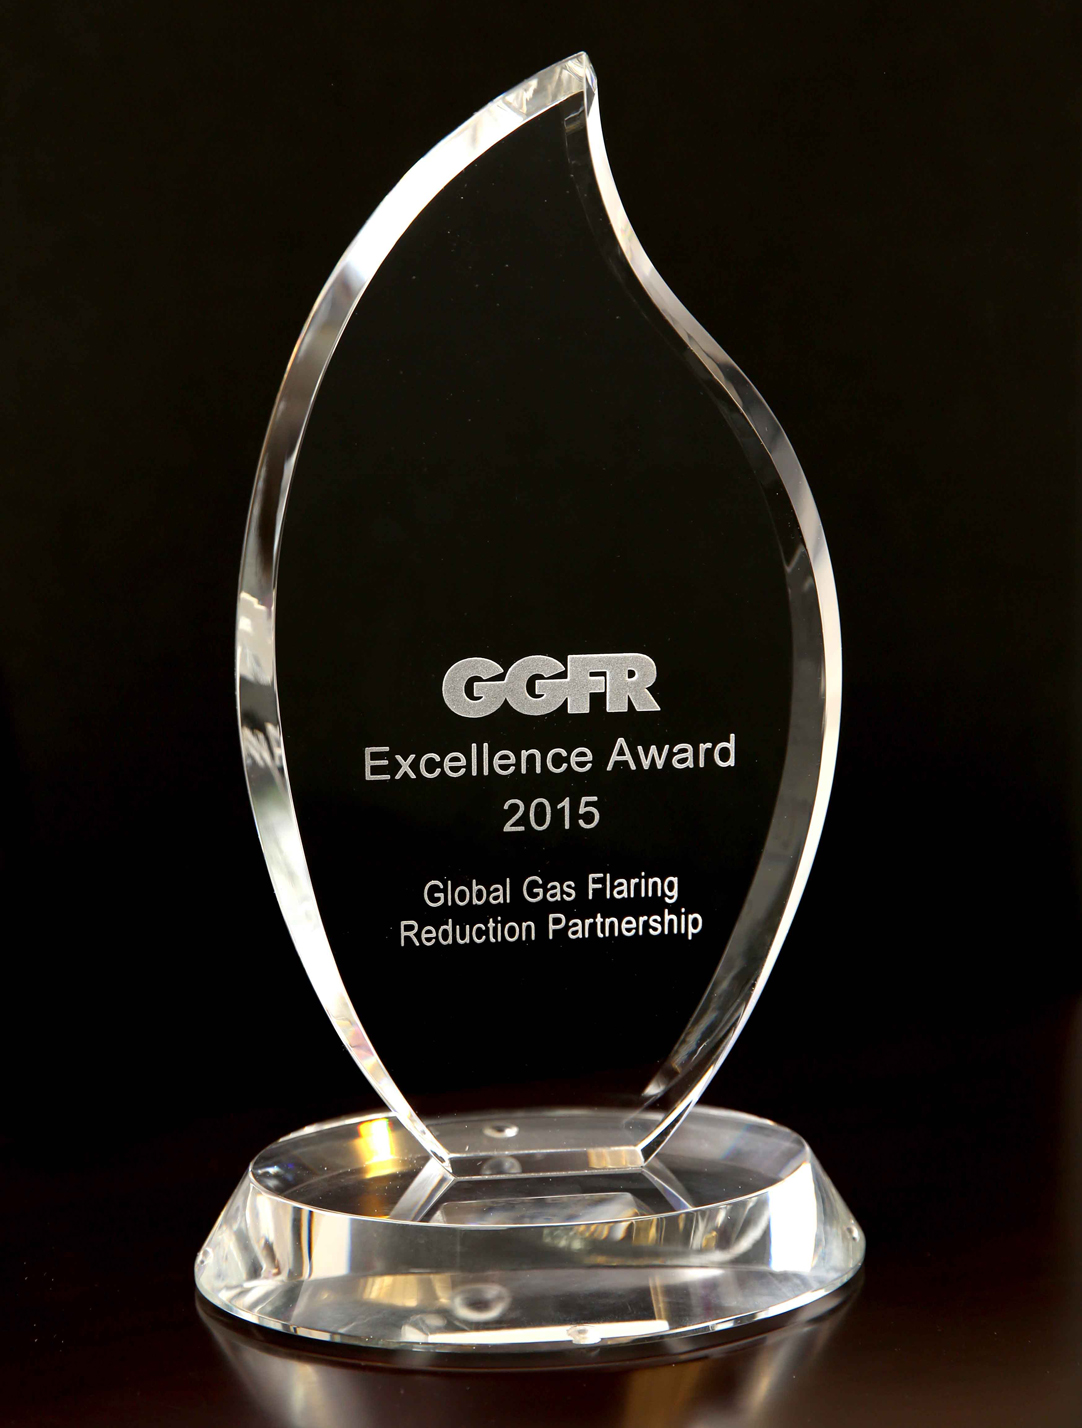 KOC wins World Bank's GGFR's award for gas reduction